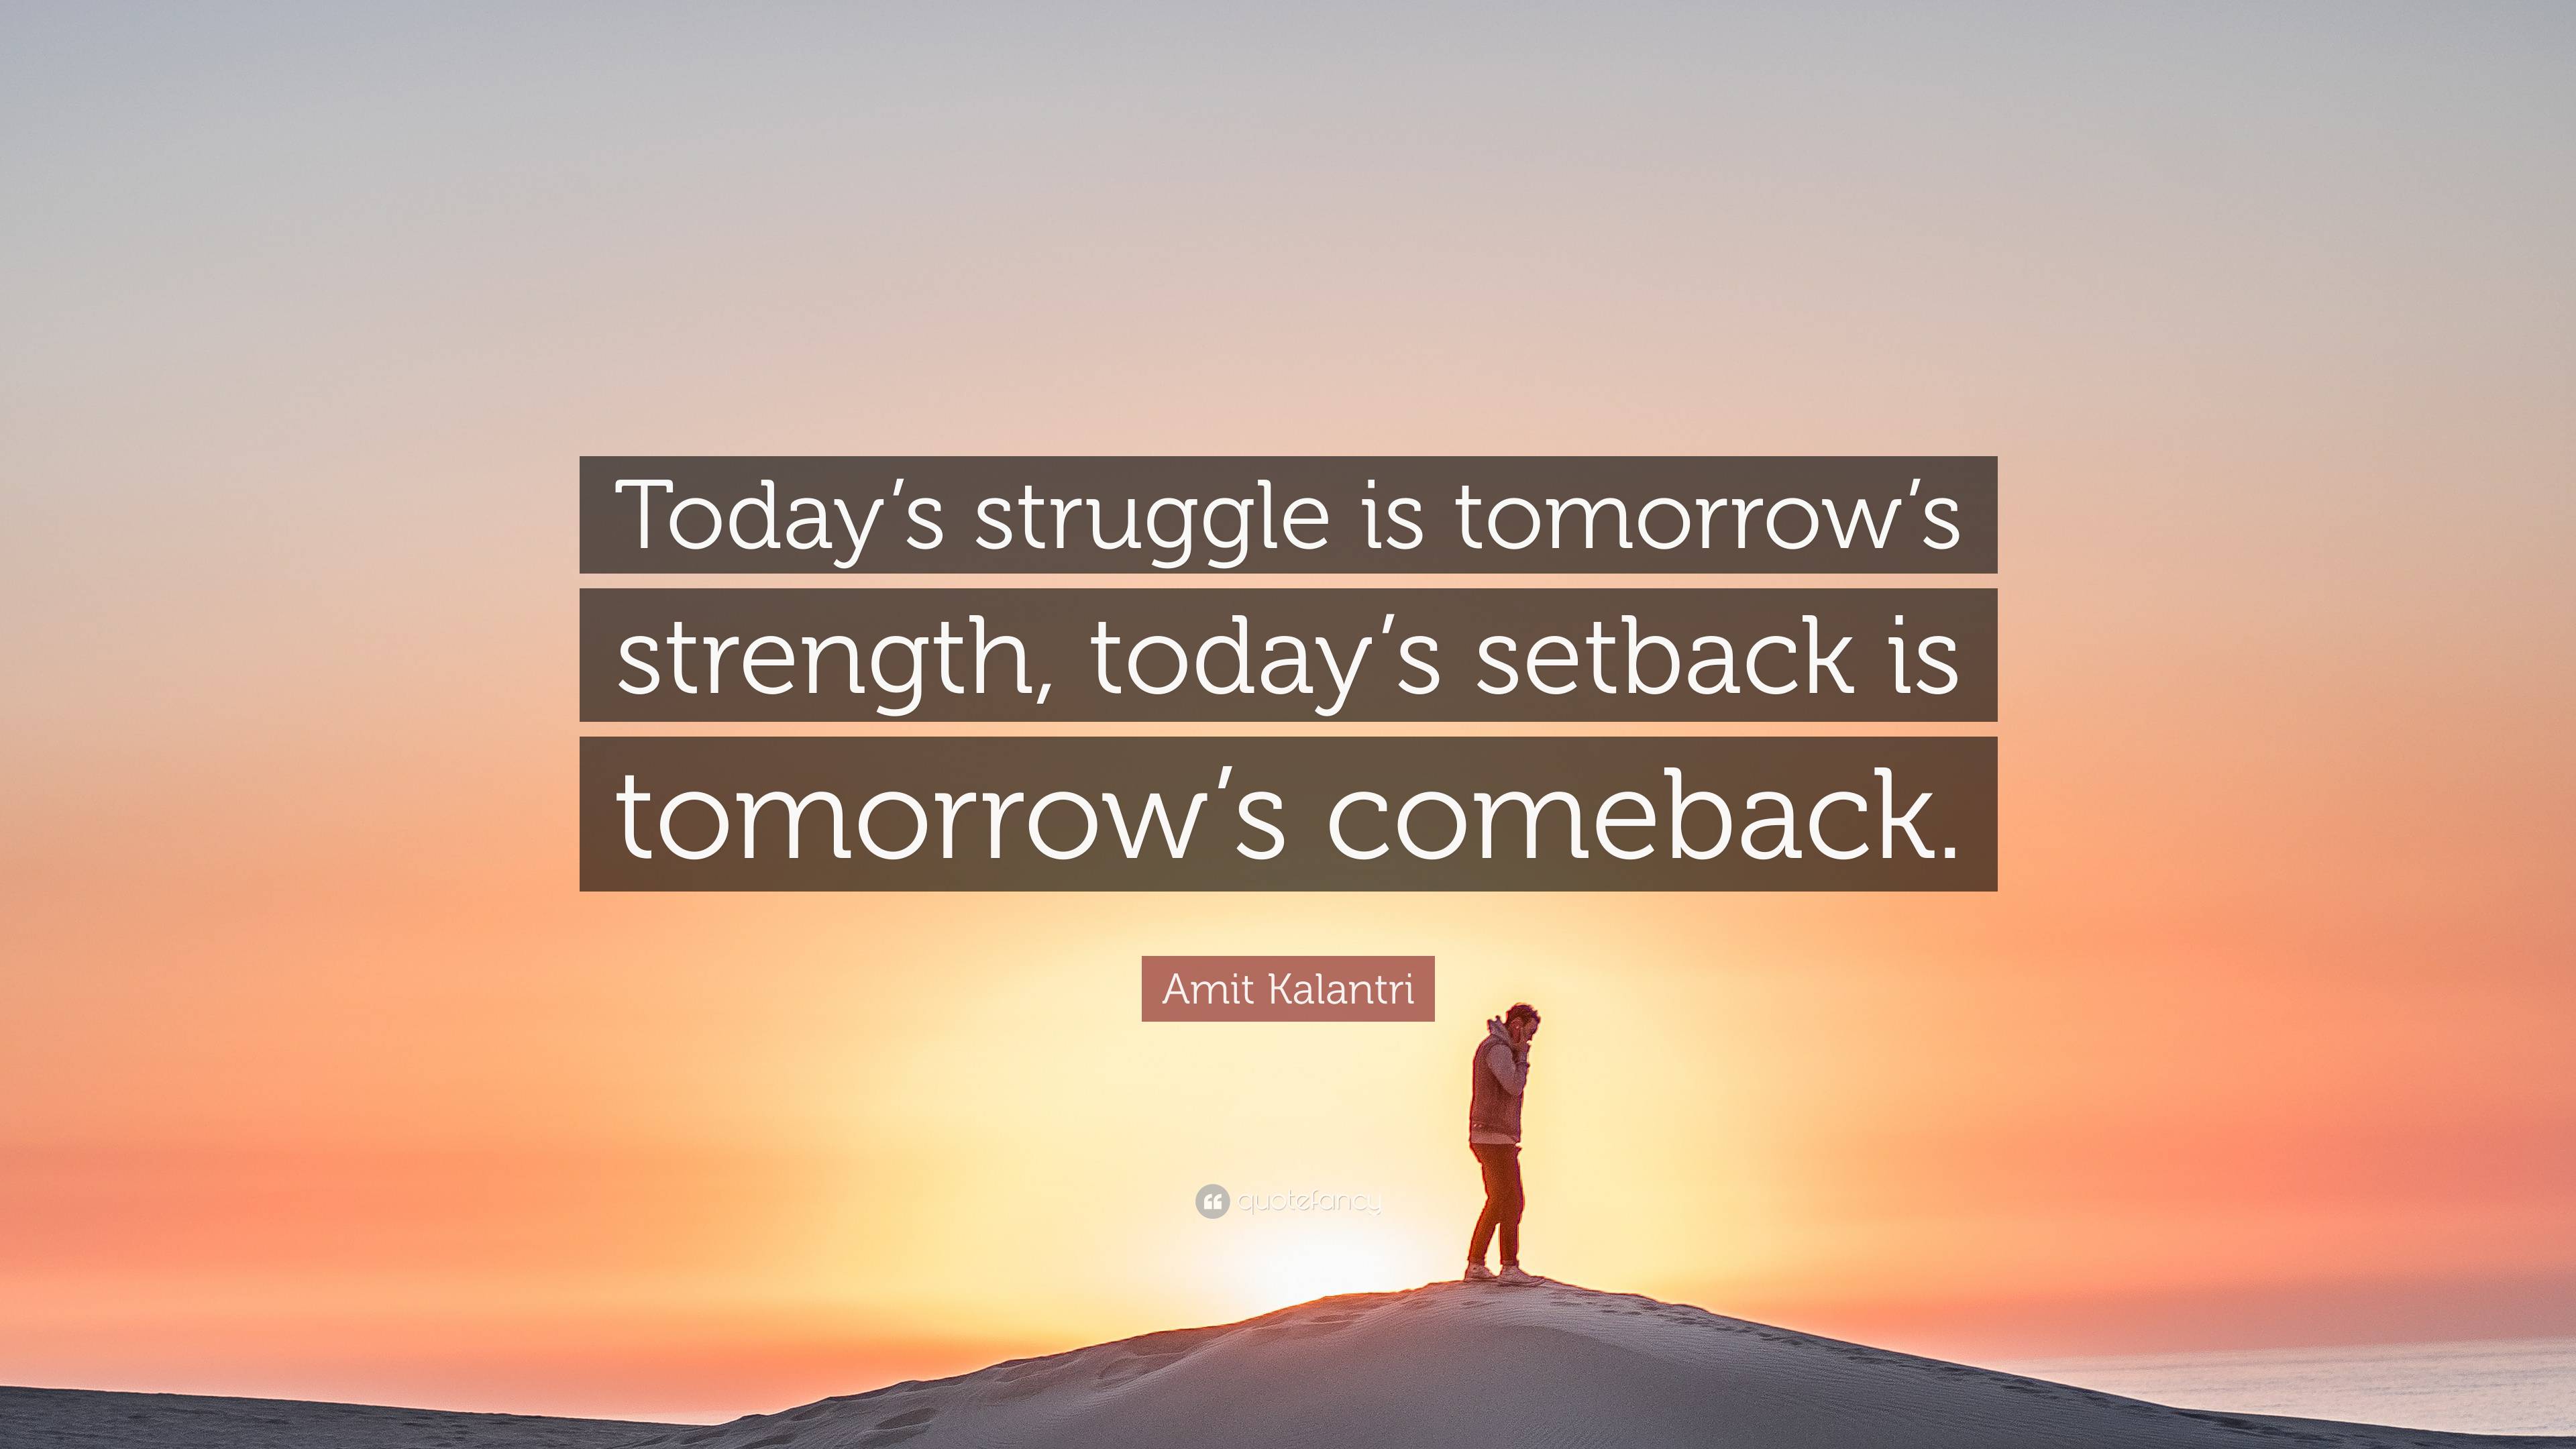 Amit Kalantri Quote: “Today's struggle is tomorrow's strength